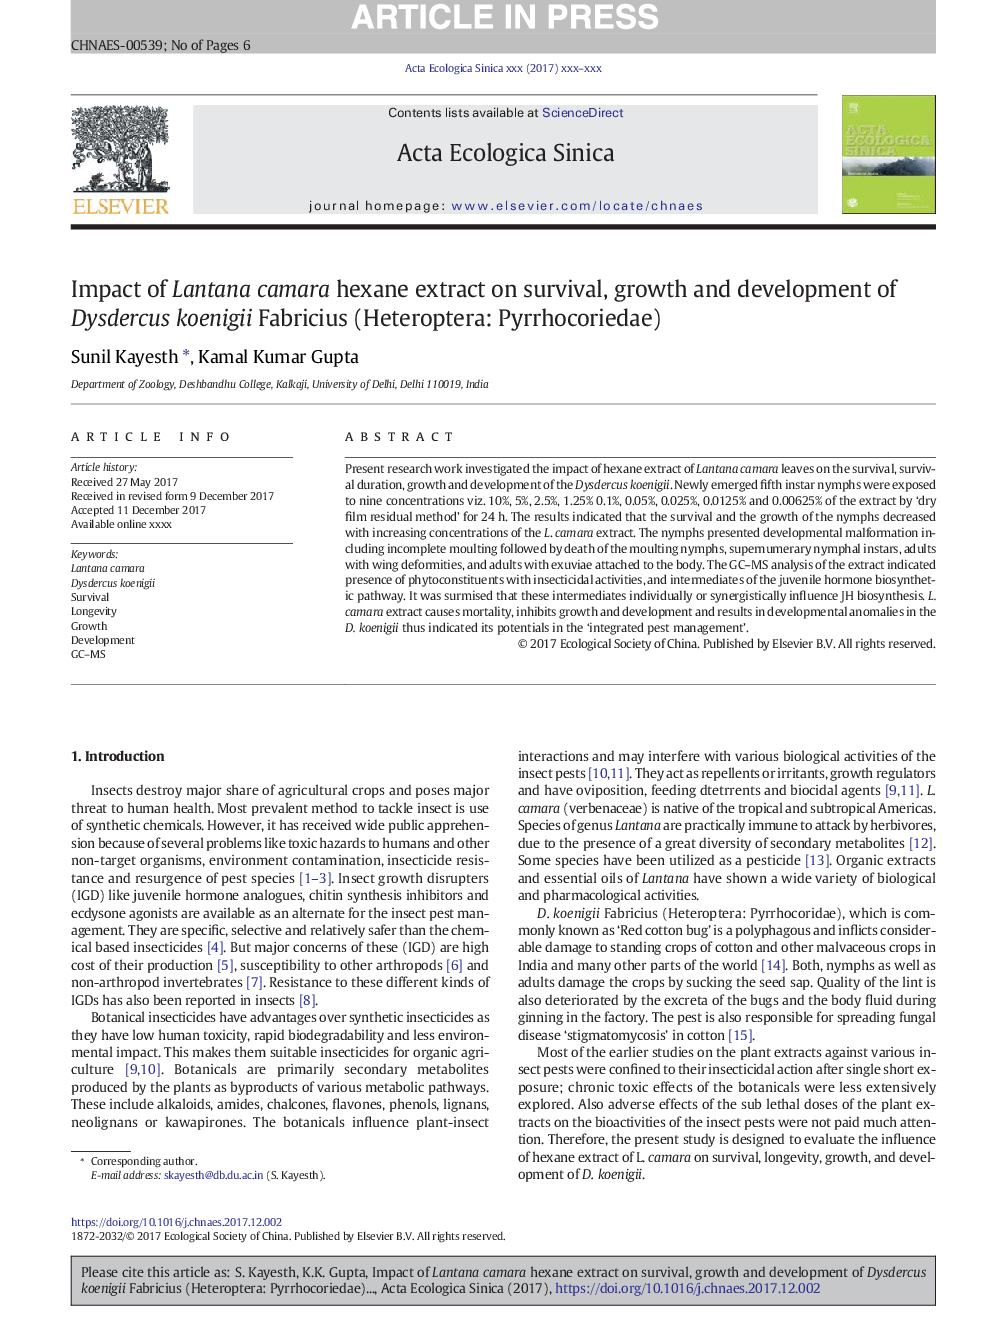 Impact of Lantana camara hexane extract on survival, growth and development of Dysdercus koenigii Fabricius (Heteroptera: Pyrrhocoriedae)